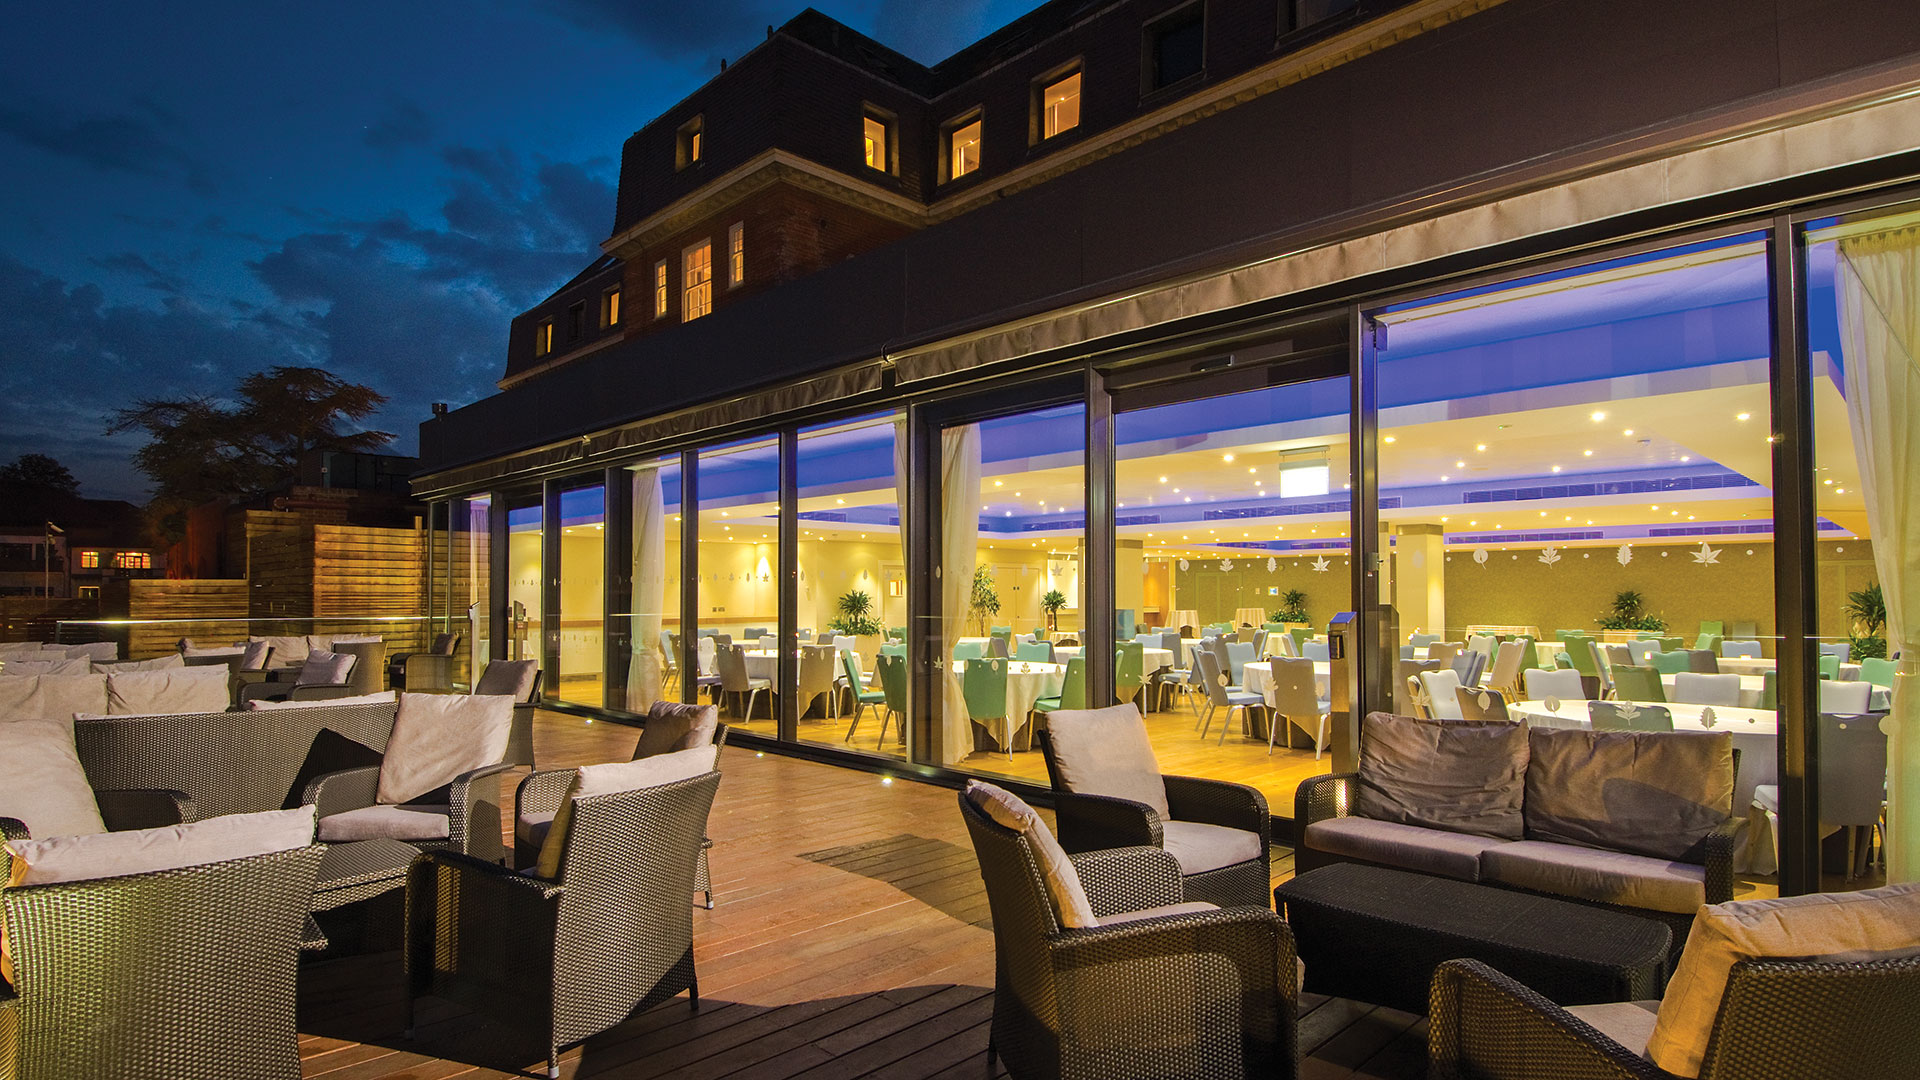 The restaurant terrace lit up at night - The Lensbury, Teddington